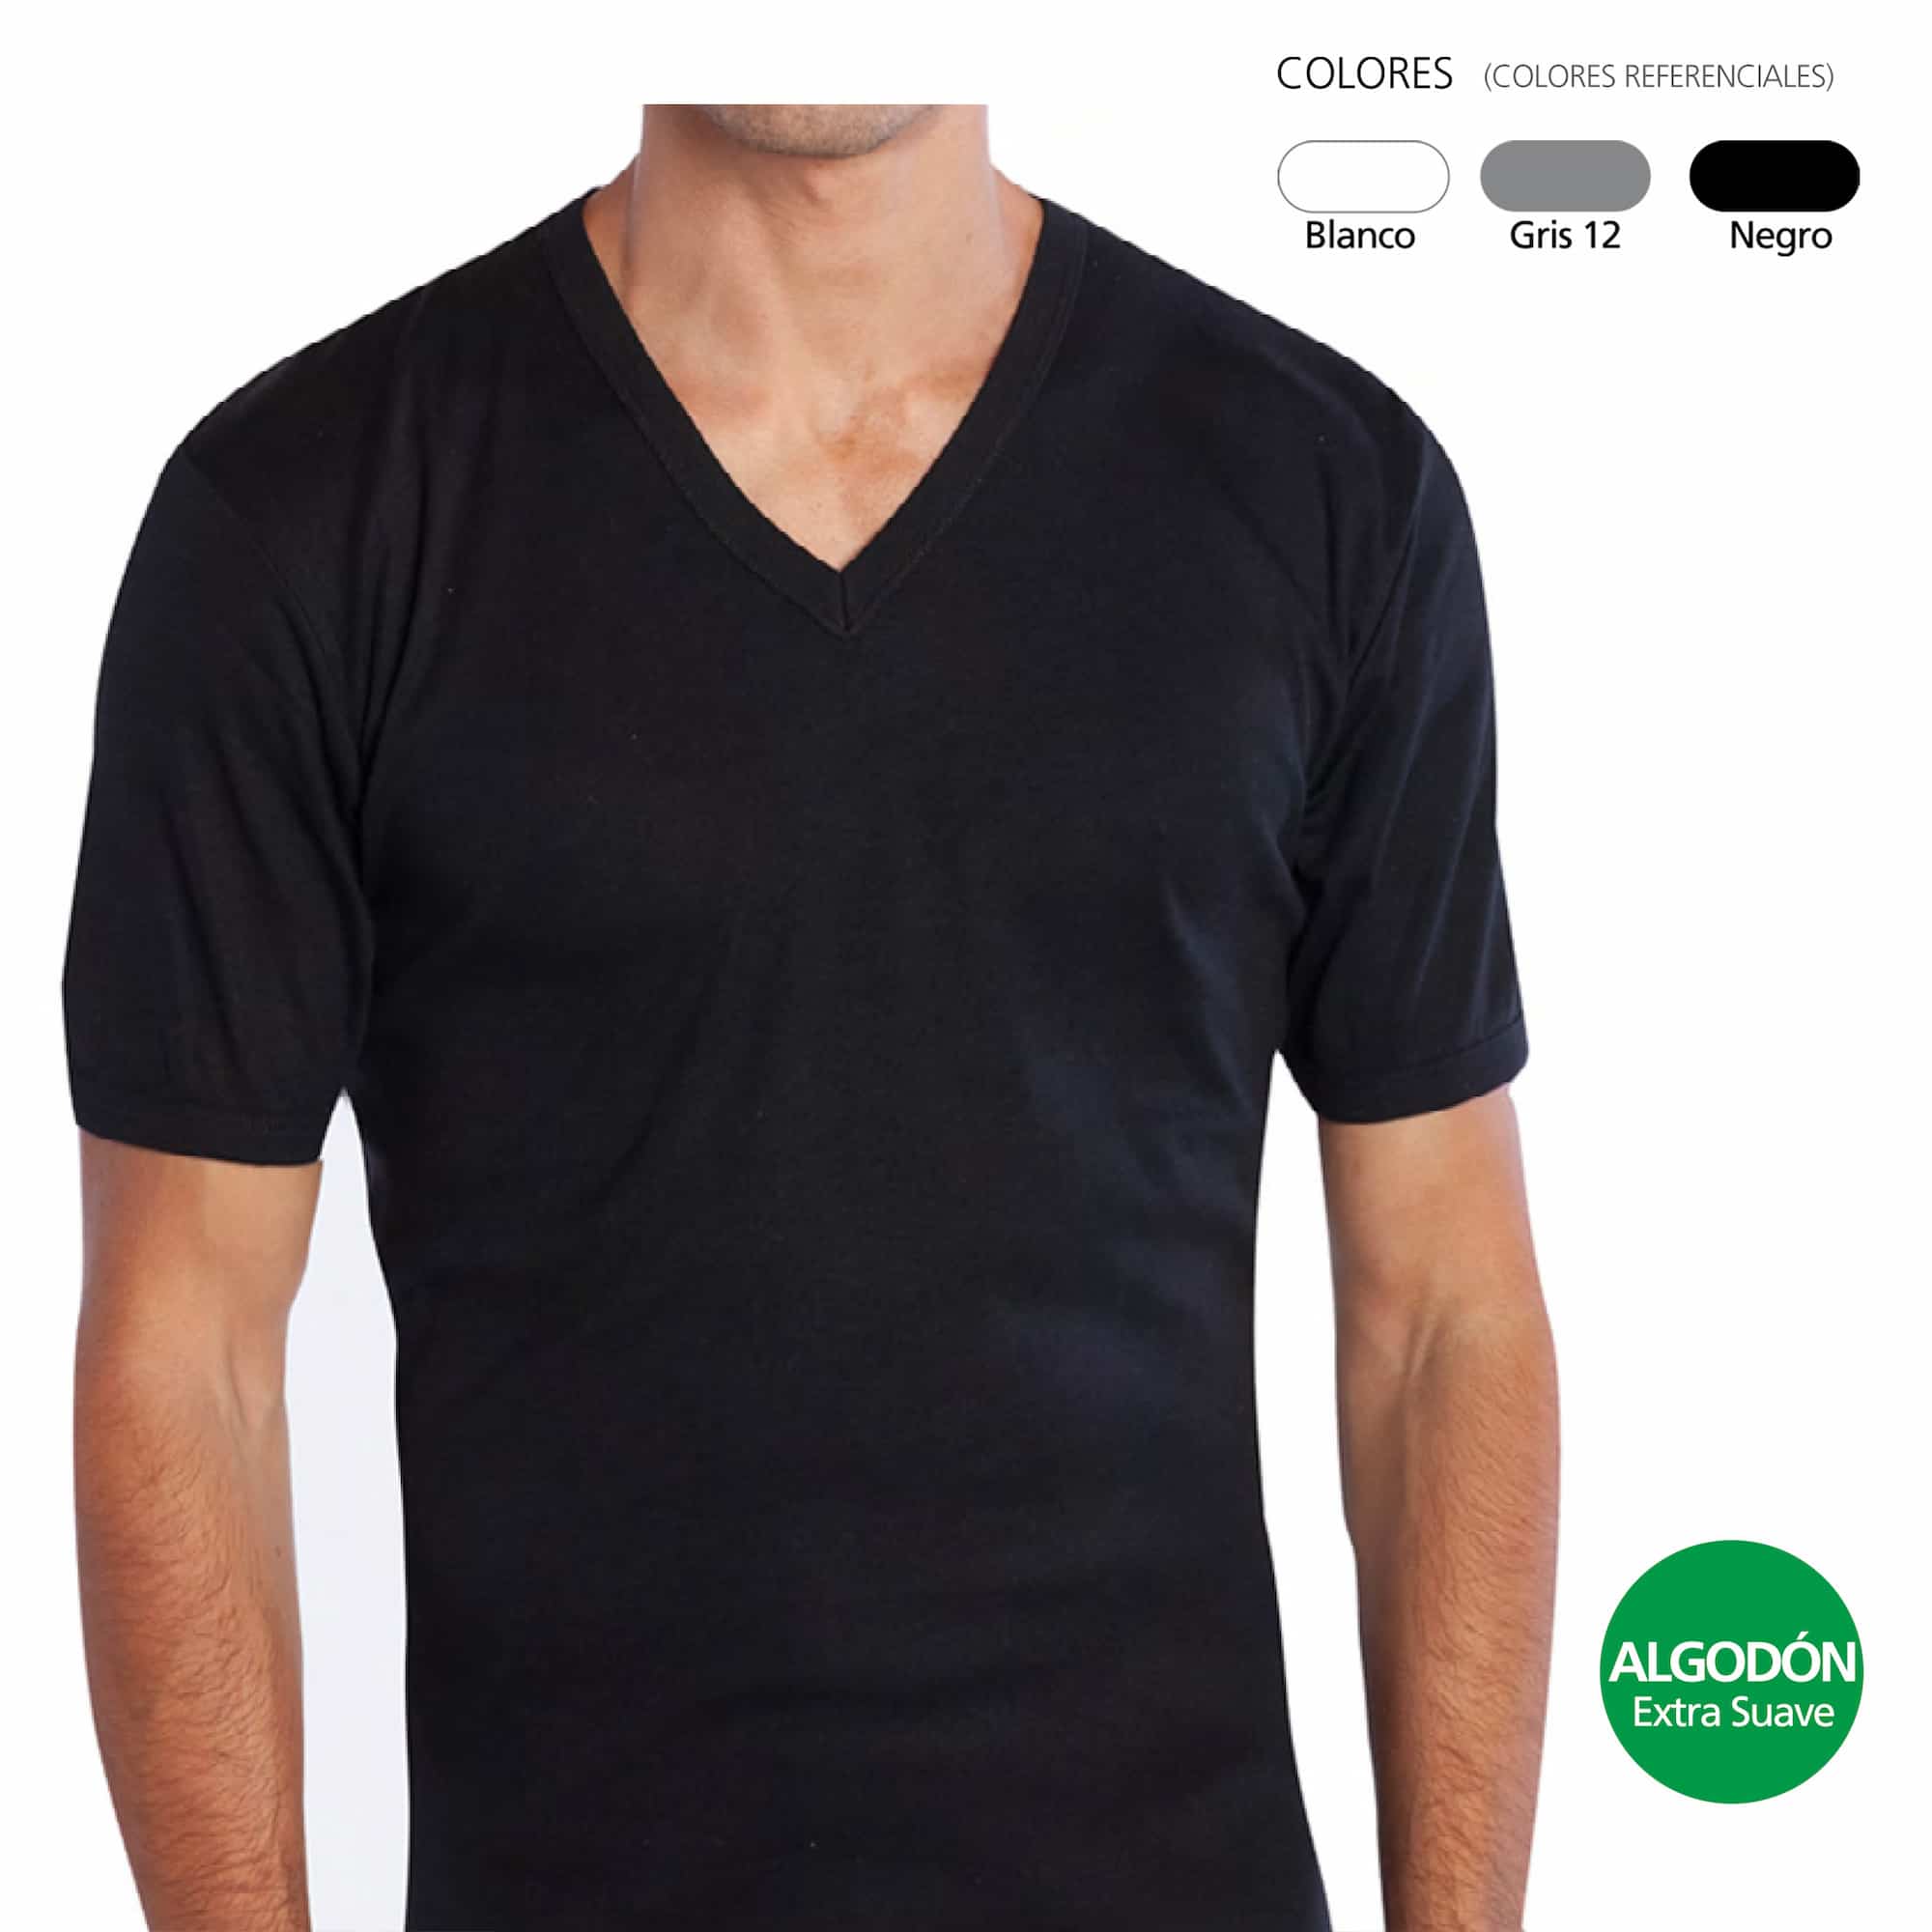 653002-Camiseta-Algodon-Cuello-V-MangaCorta-Tais